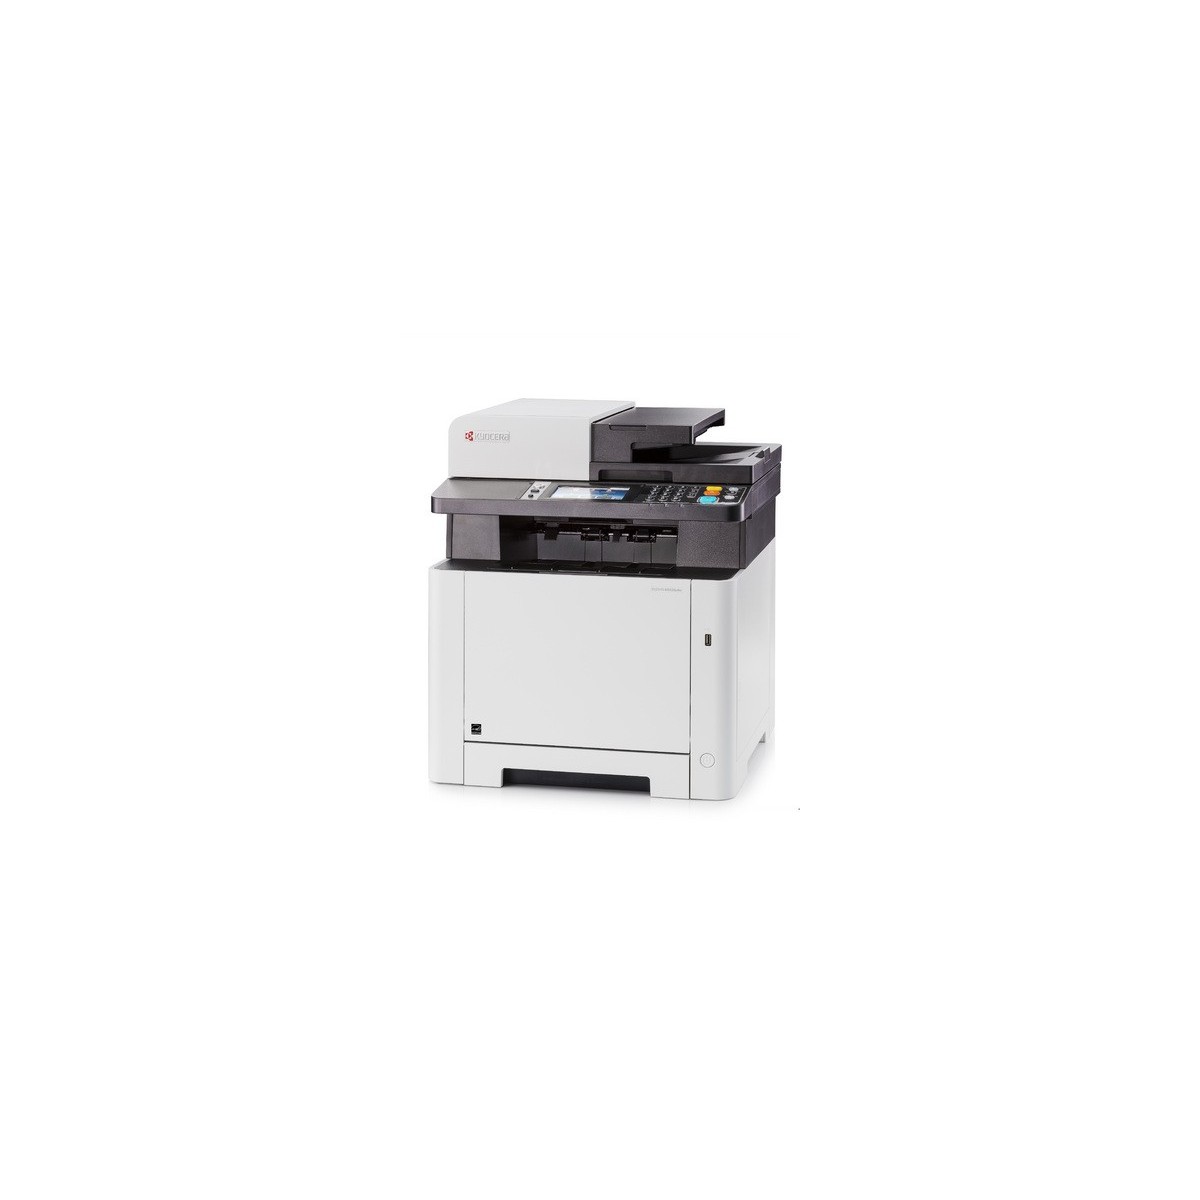 Kyocera ECOSYS M5526cdw - Laser - Colour printing - 1200 x 1200 DPI - A4 - Direct printing - Black - White